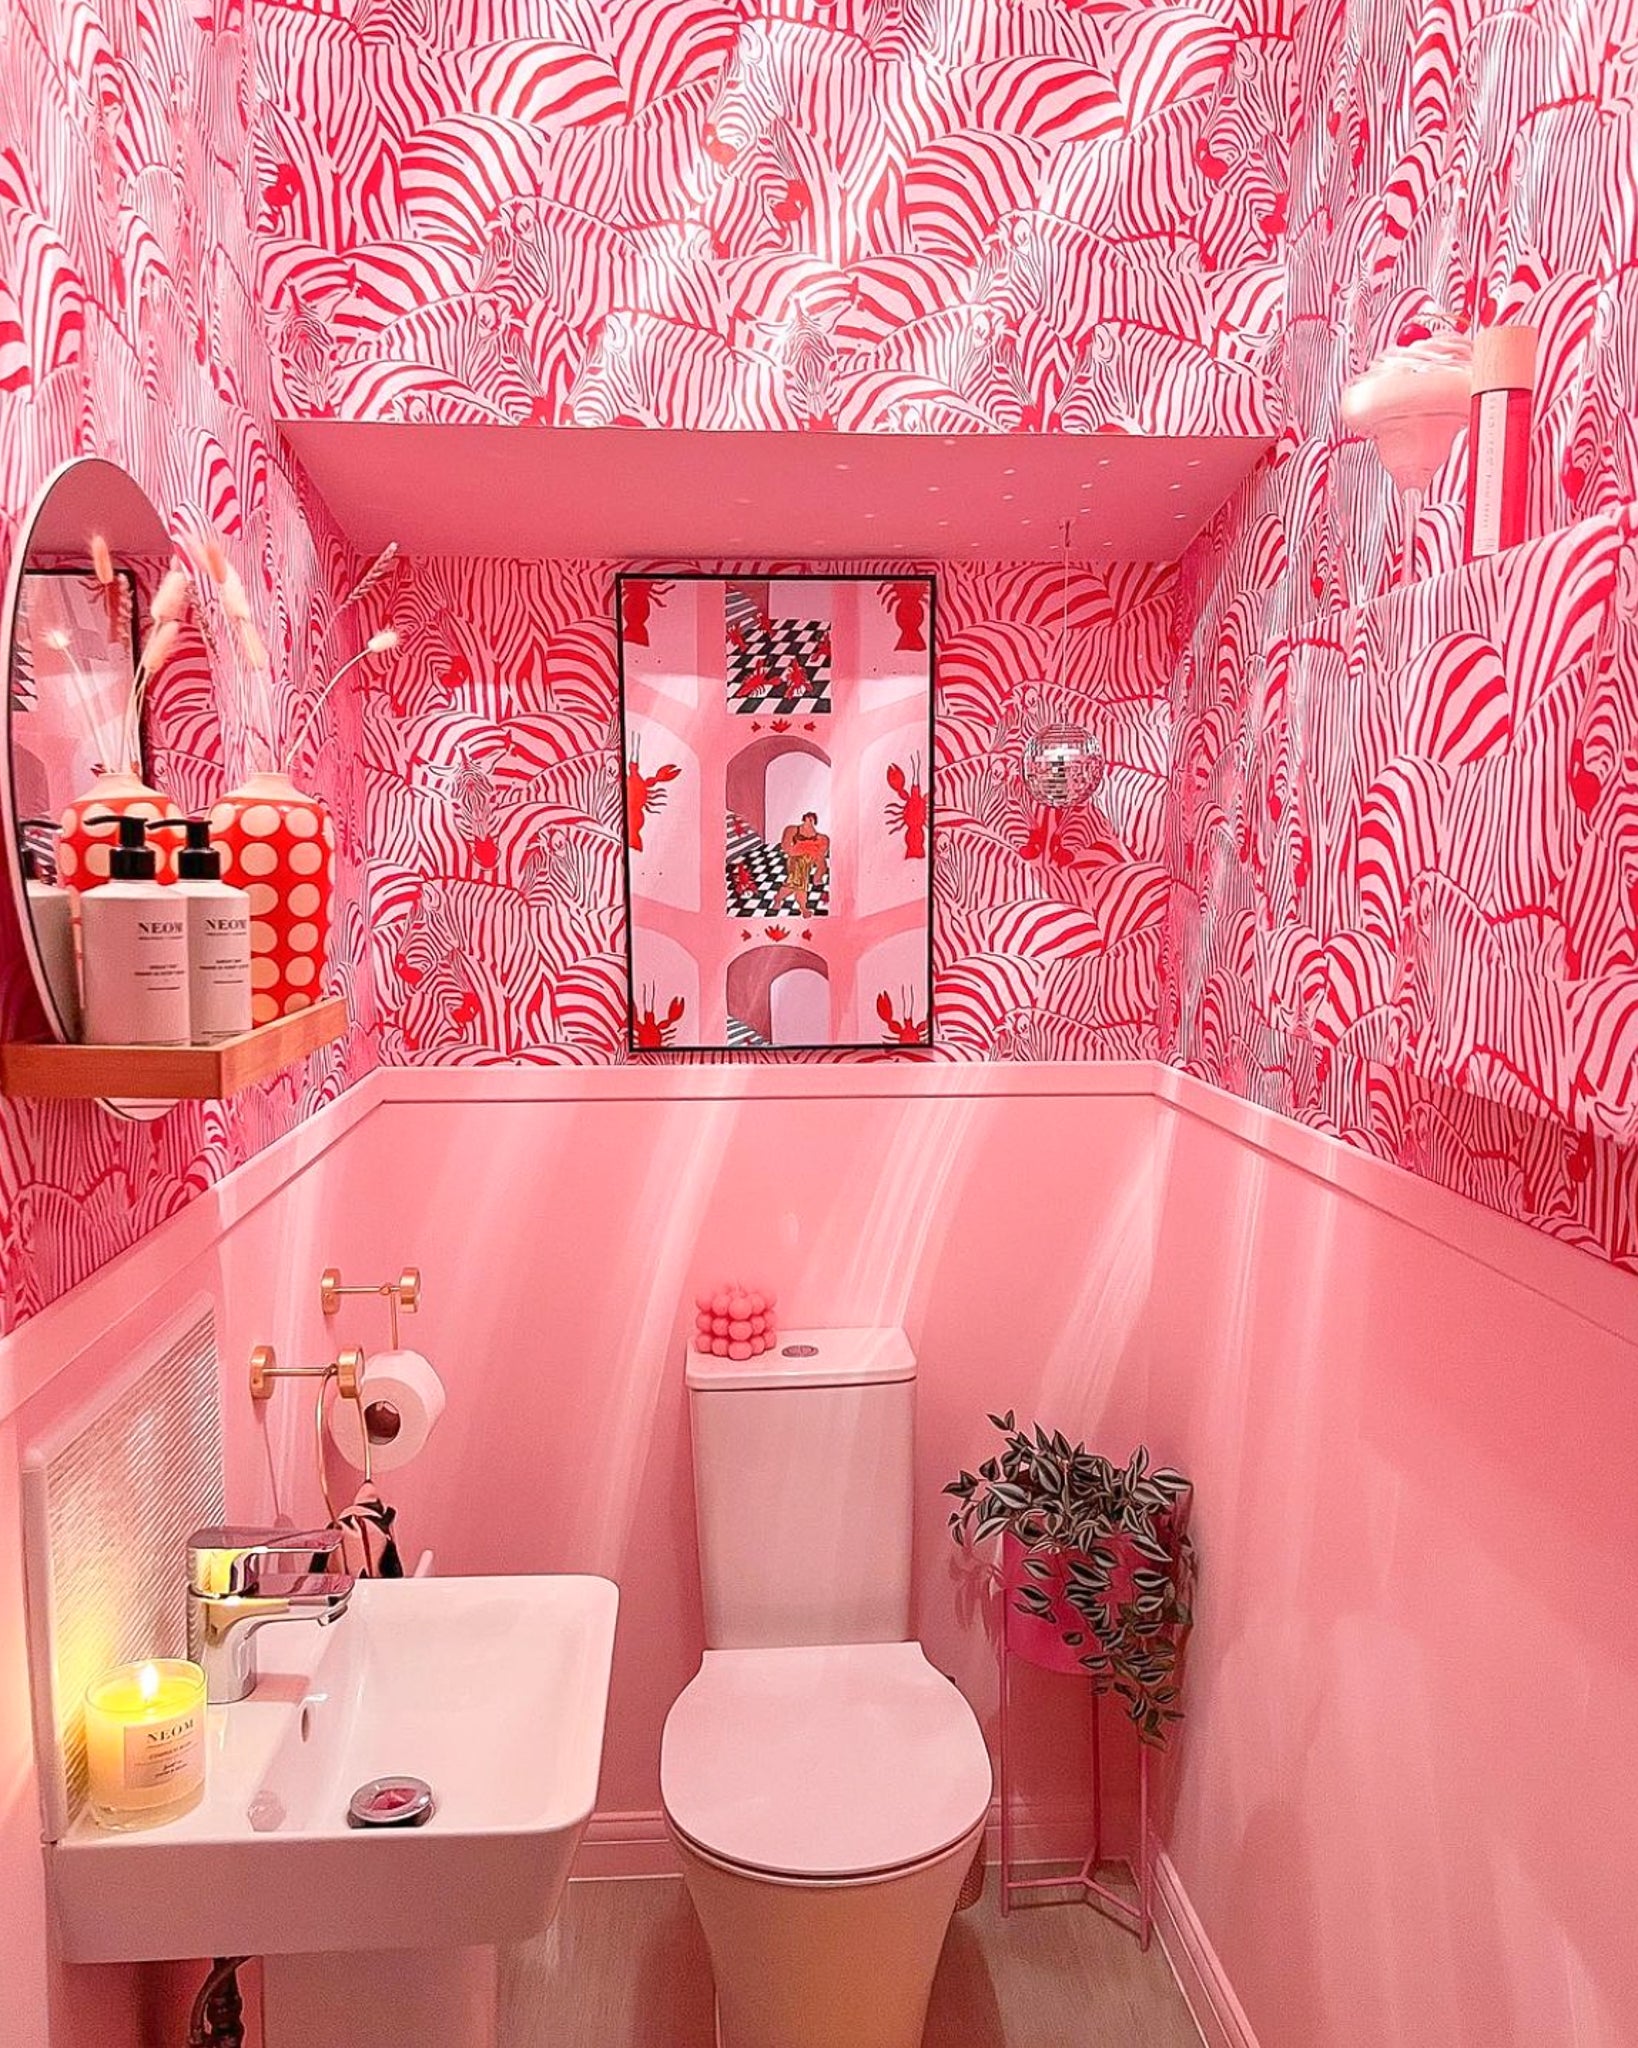 Hide and Seek Wallpaper in Red and Pink bathroom @letsgotopoppys.jpg__PID:f9778201-7b8a-47d8-8dd2-ecab08c69756